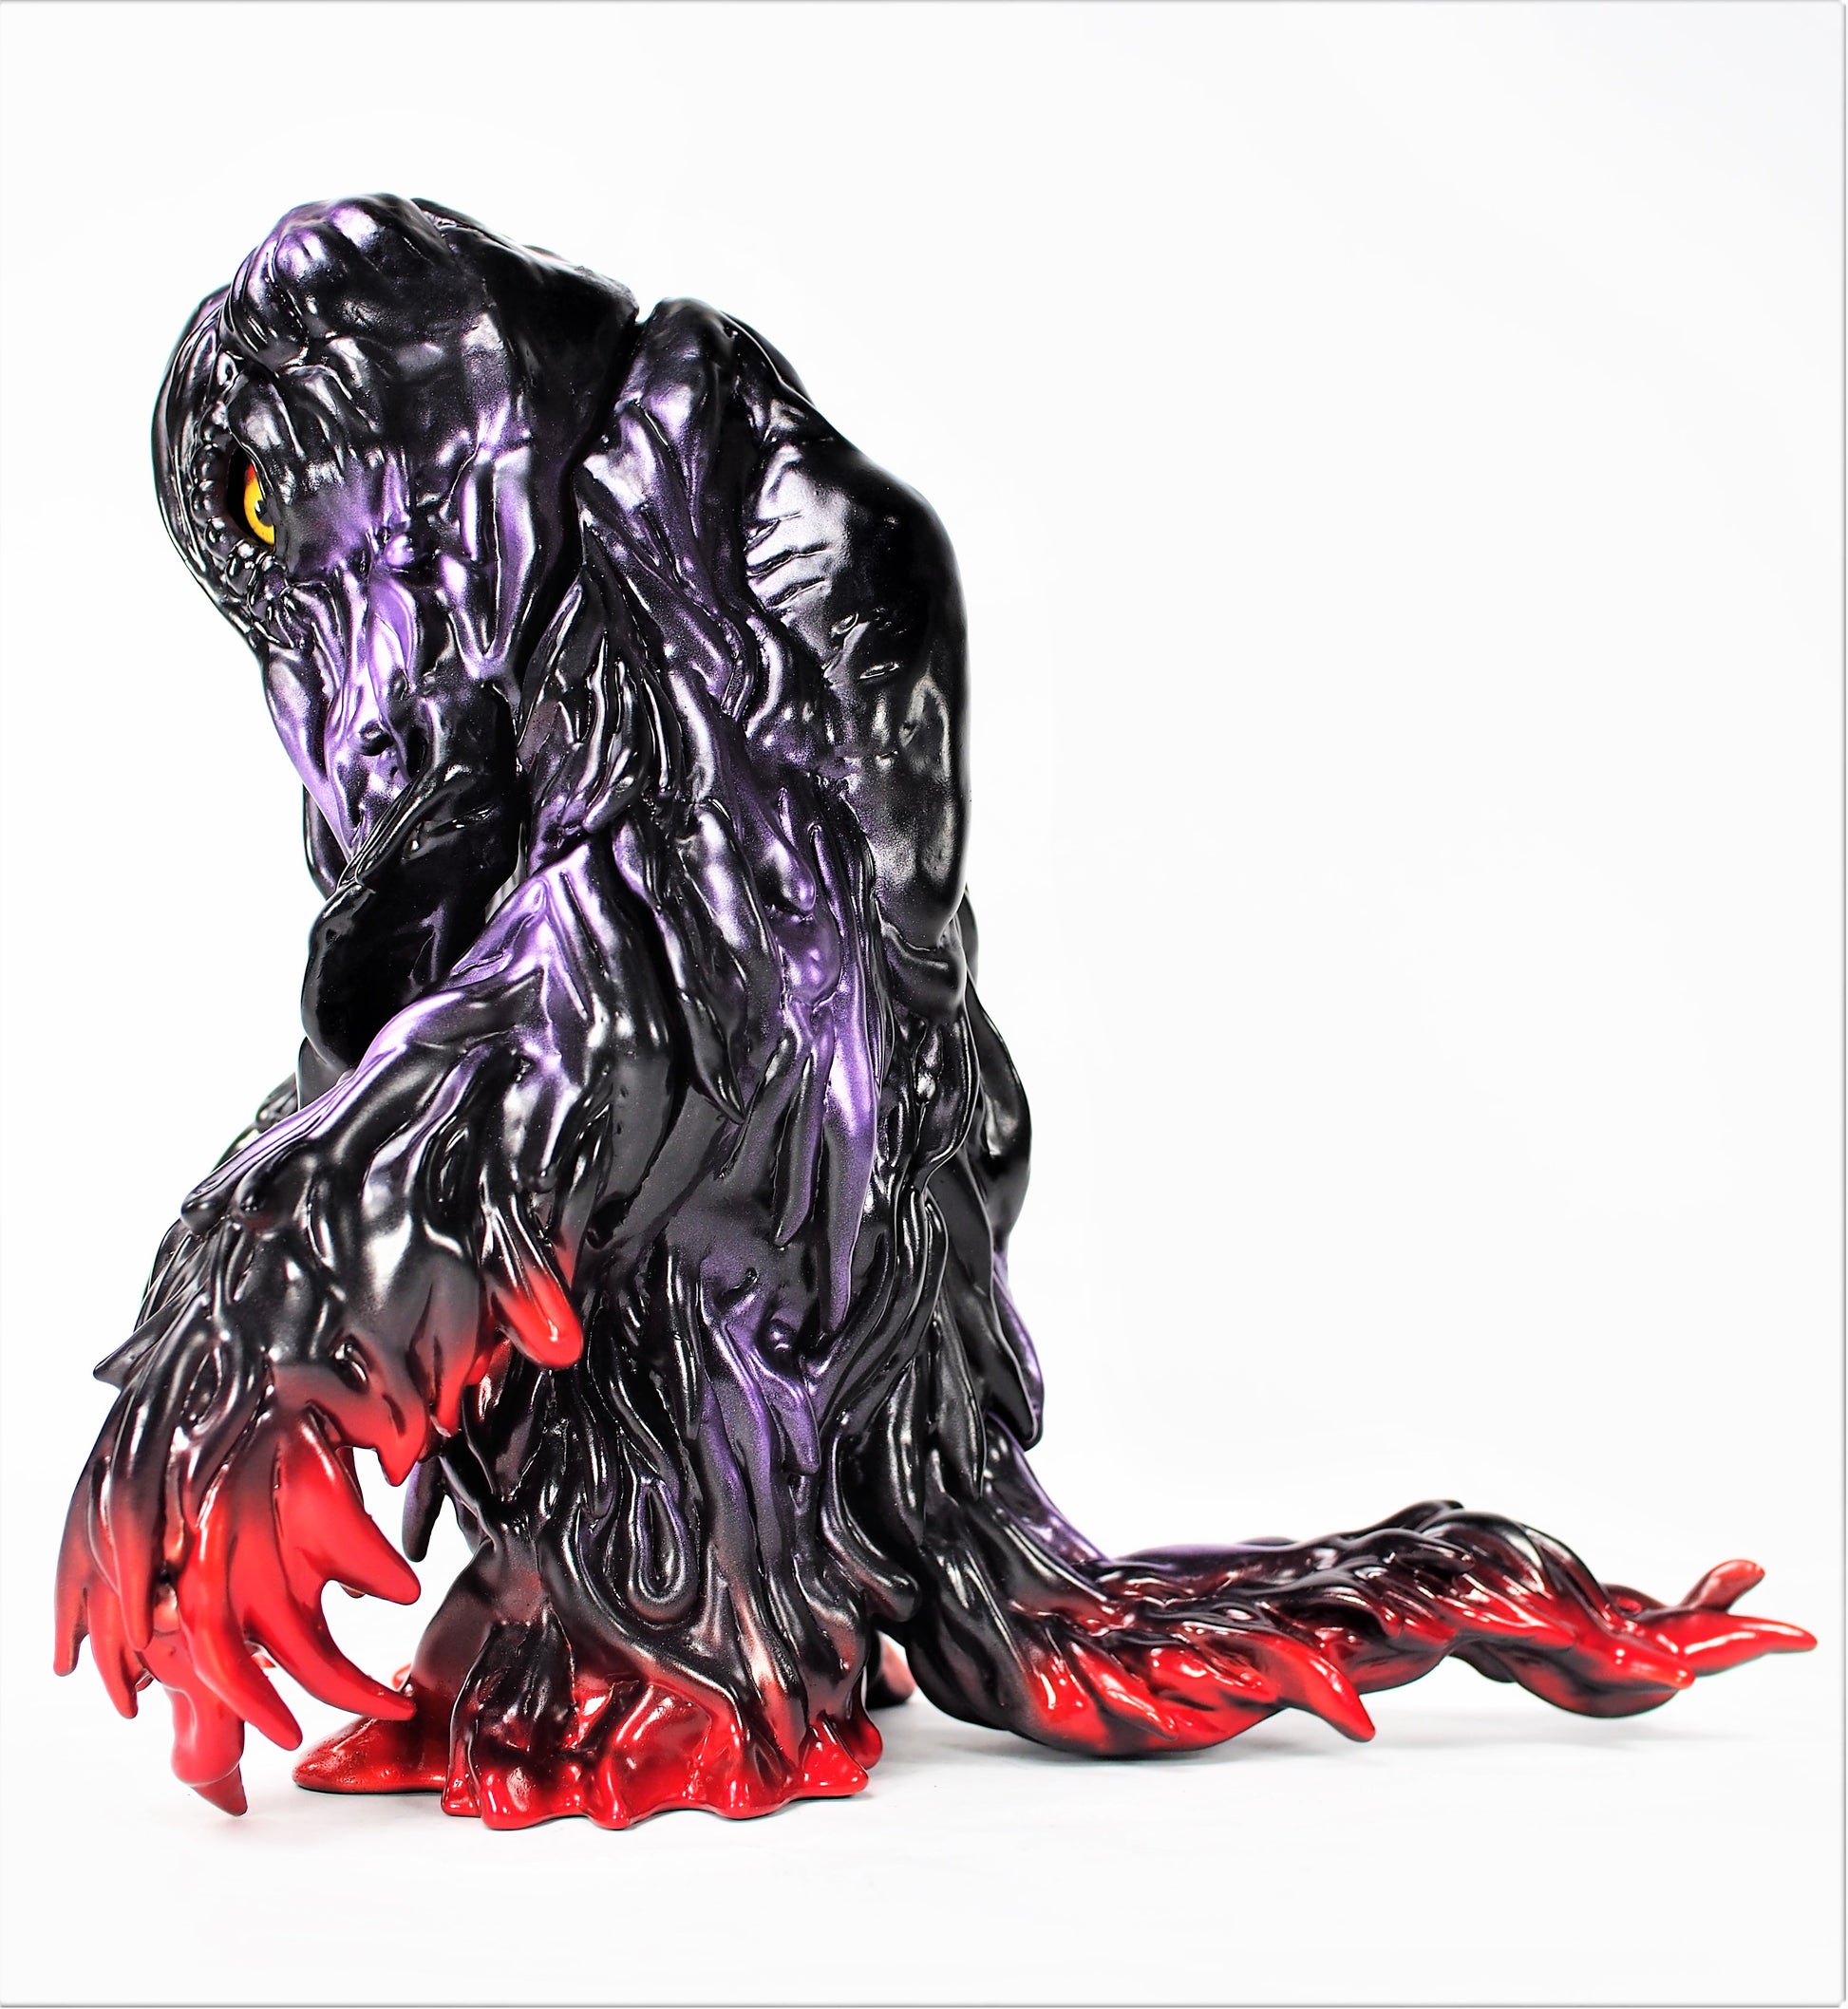 CCP Artistic Monsters Collection "Godzilla" Hedorah Grown Nightmare Ver. | animota